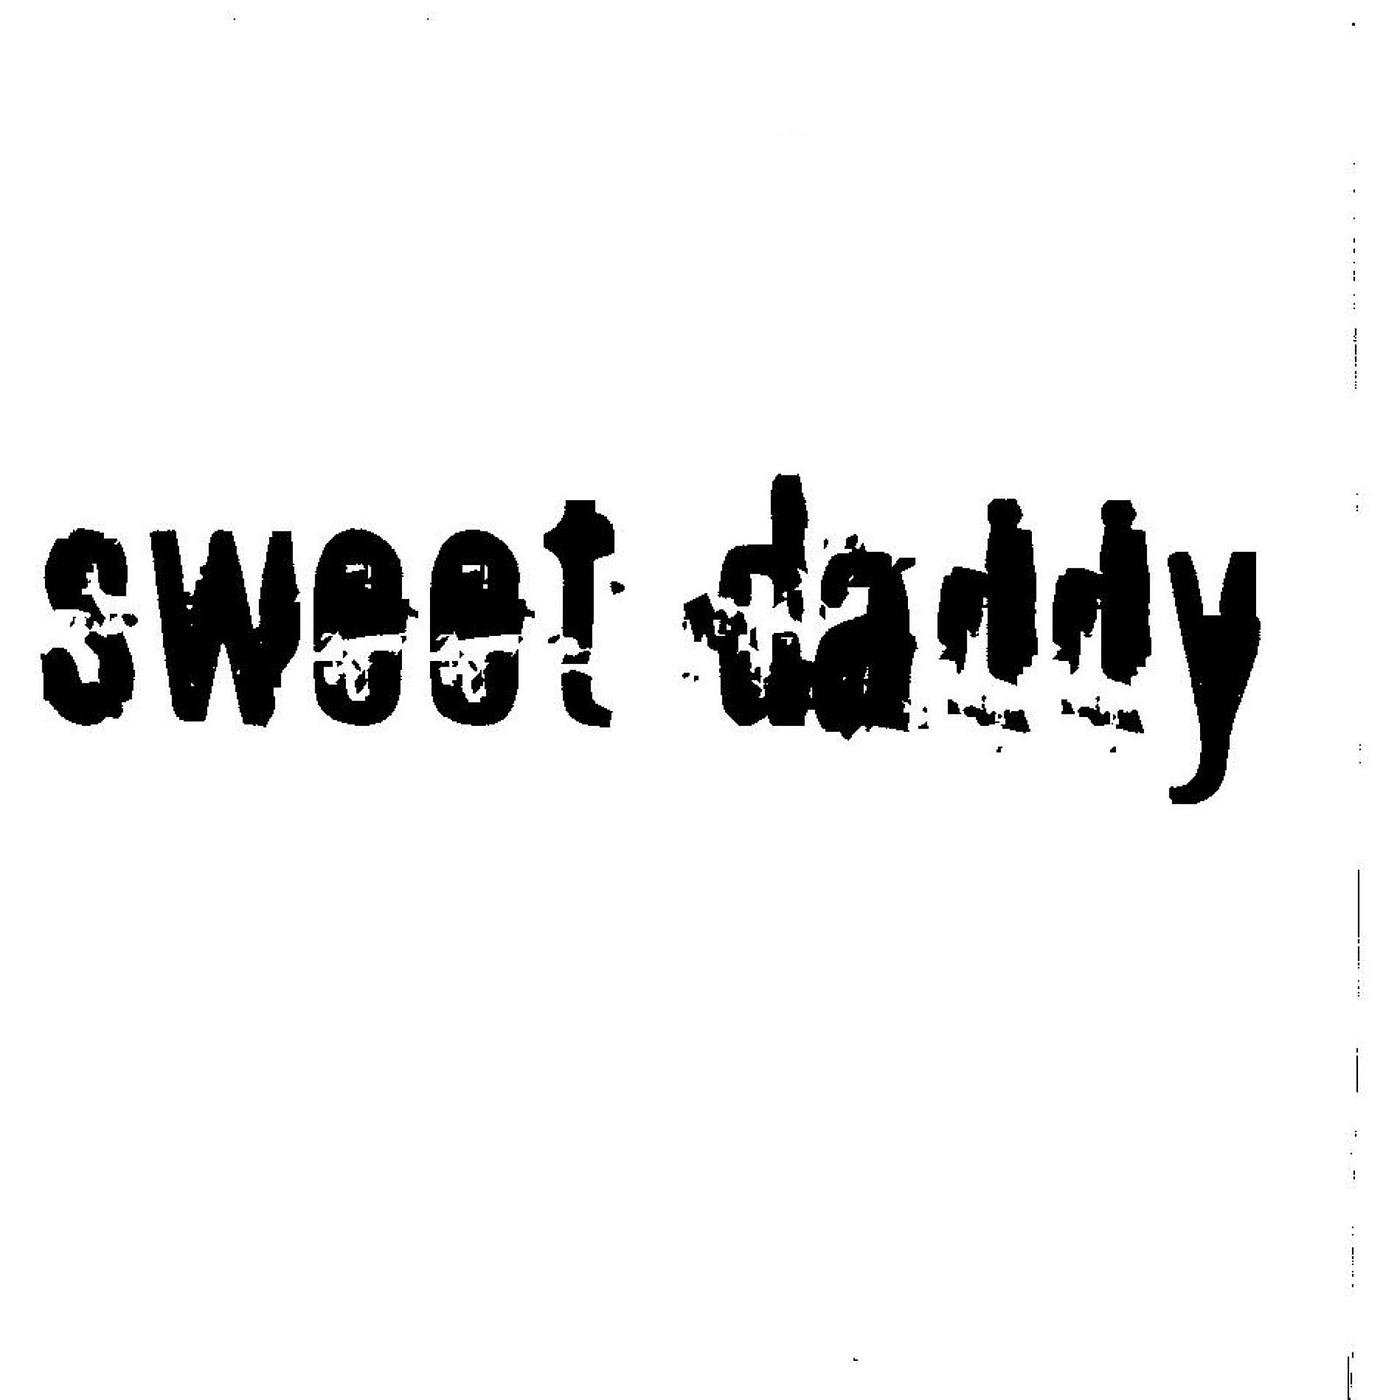 Постер альбома Sweet Daddy